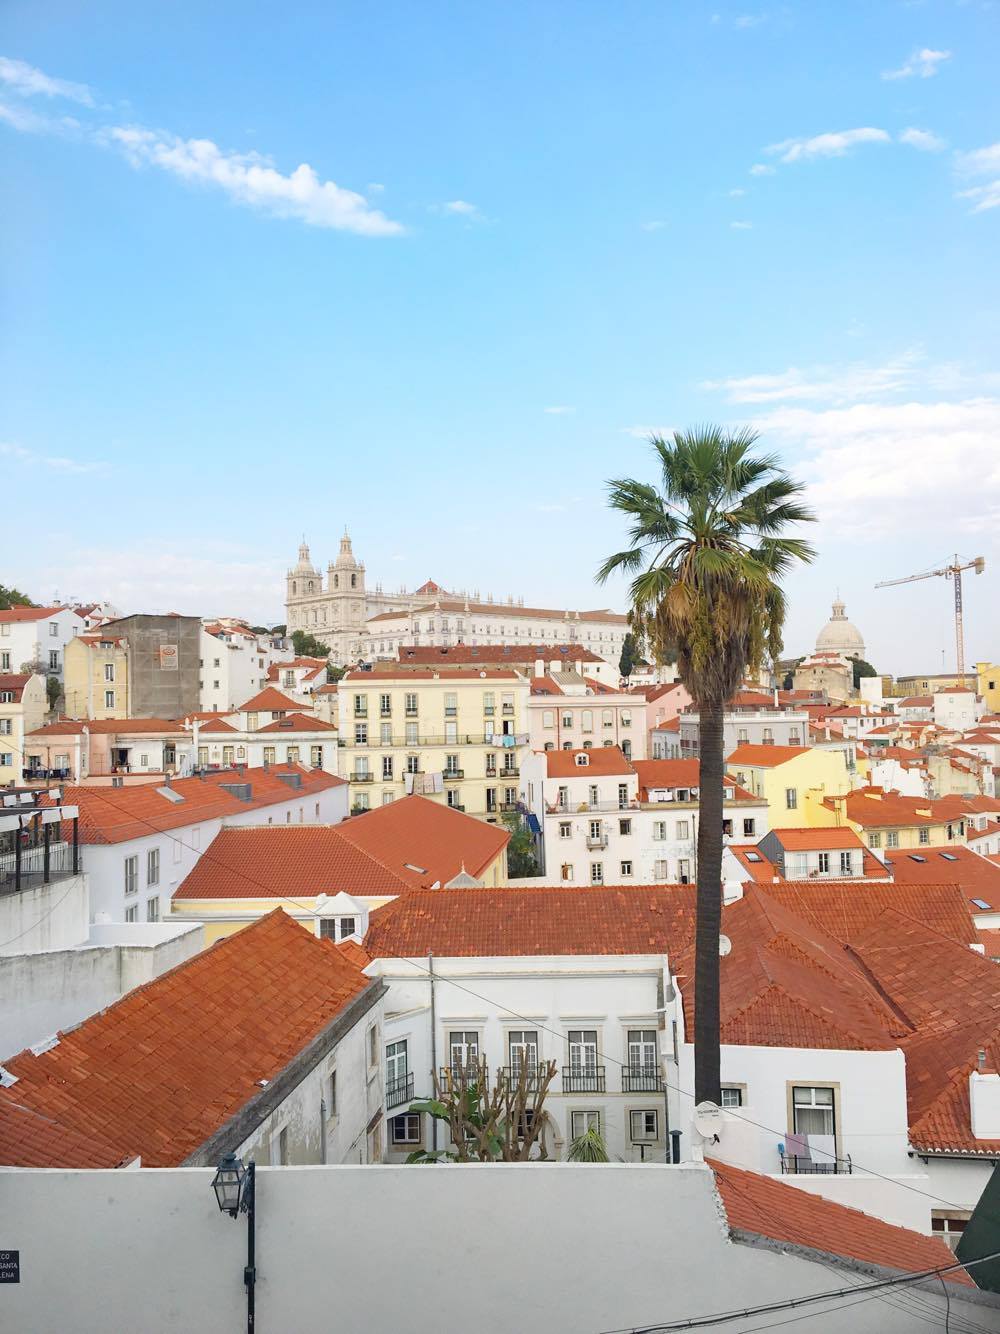 Terra-cotta rooftops in Lisbon, Portugal